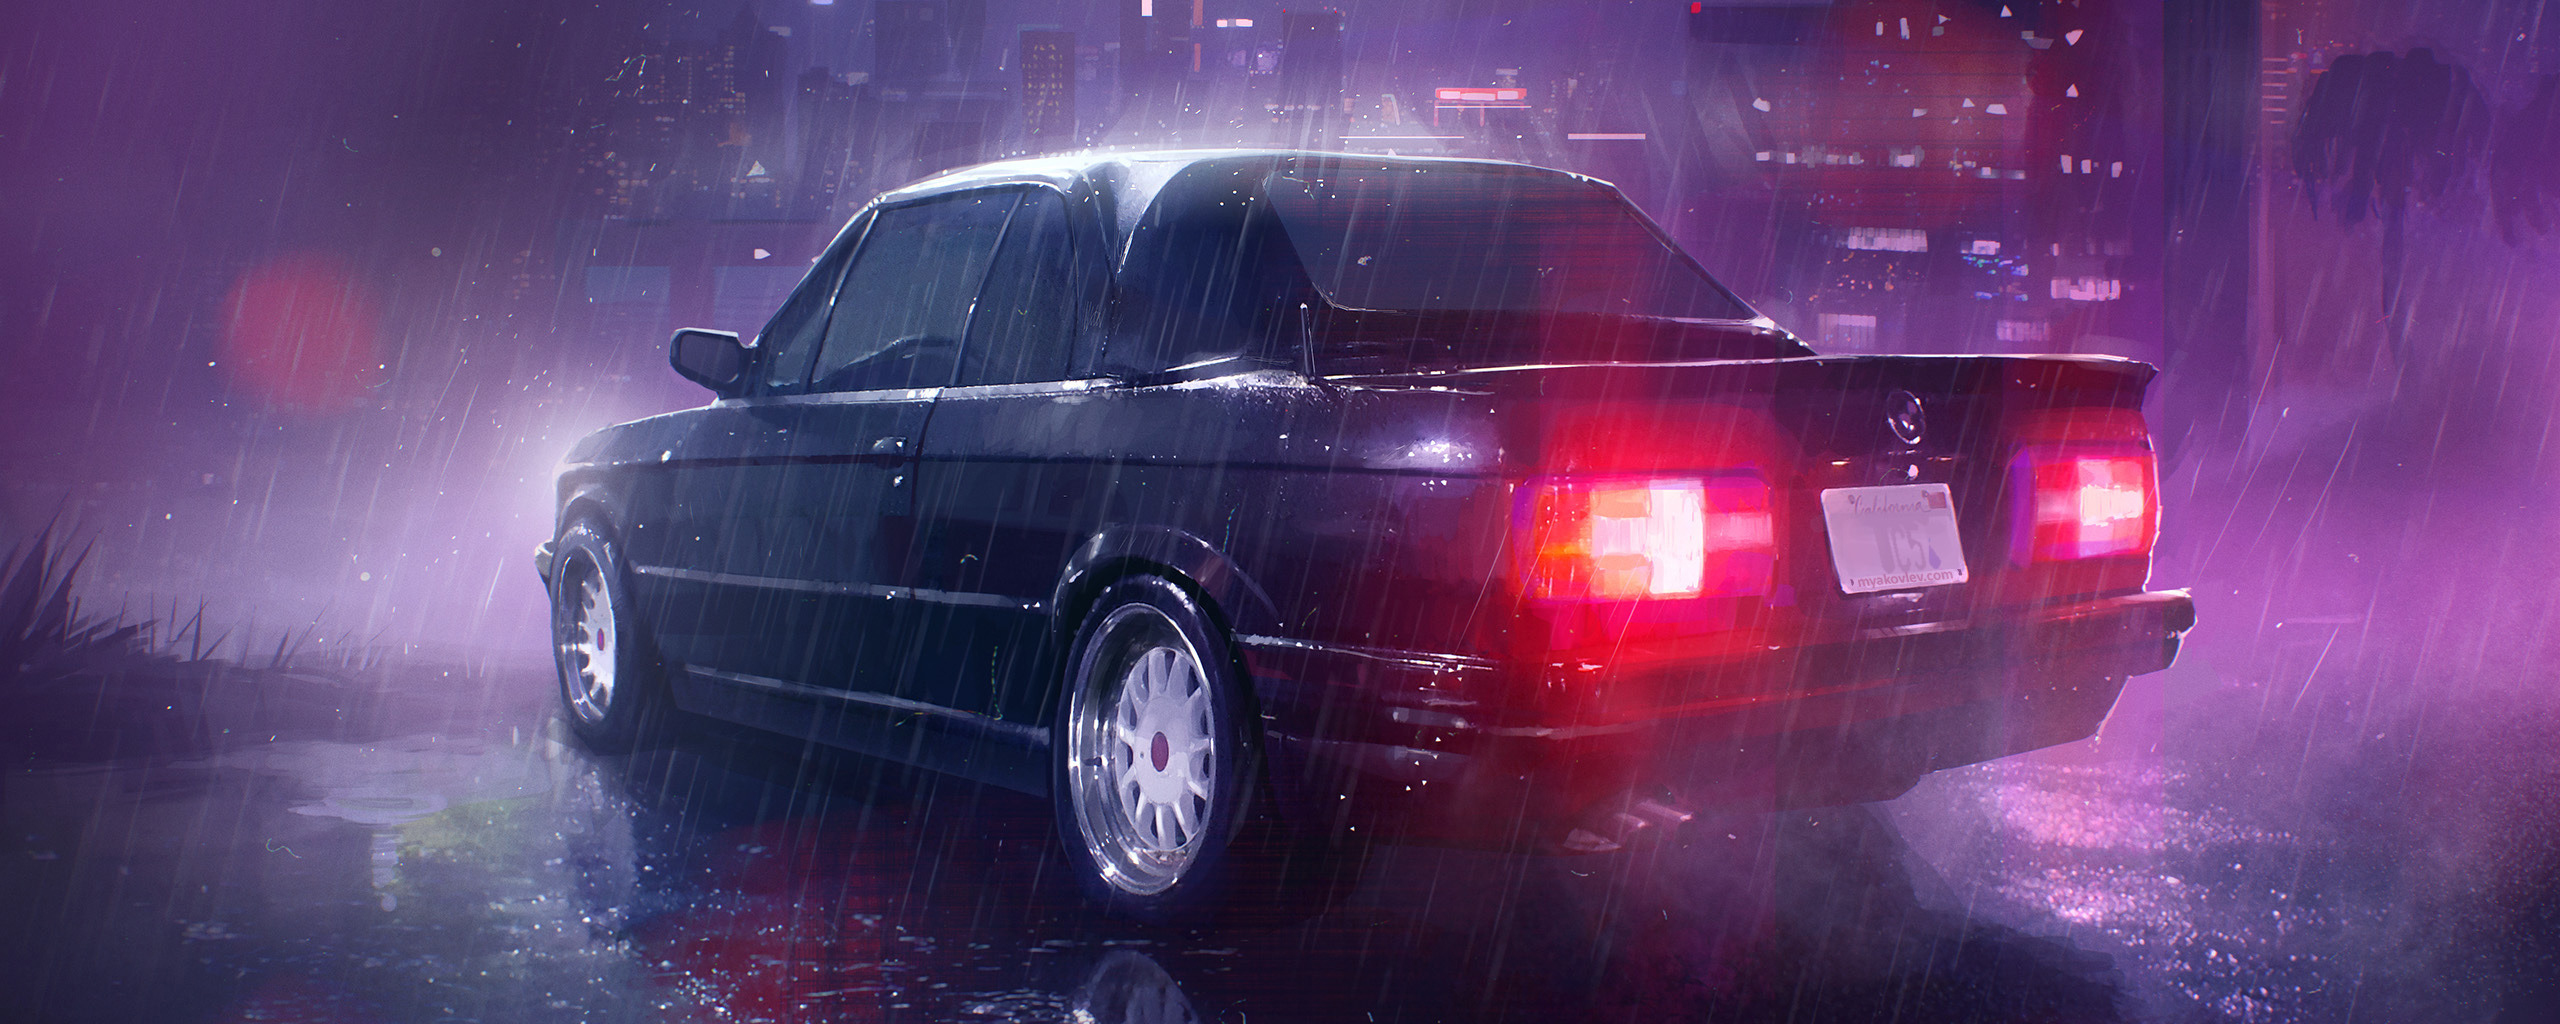 Rain, neon lights, taillight, car, art, 2560x1024 wallpaper